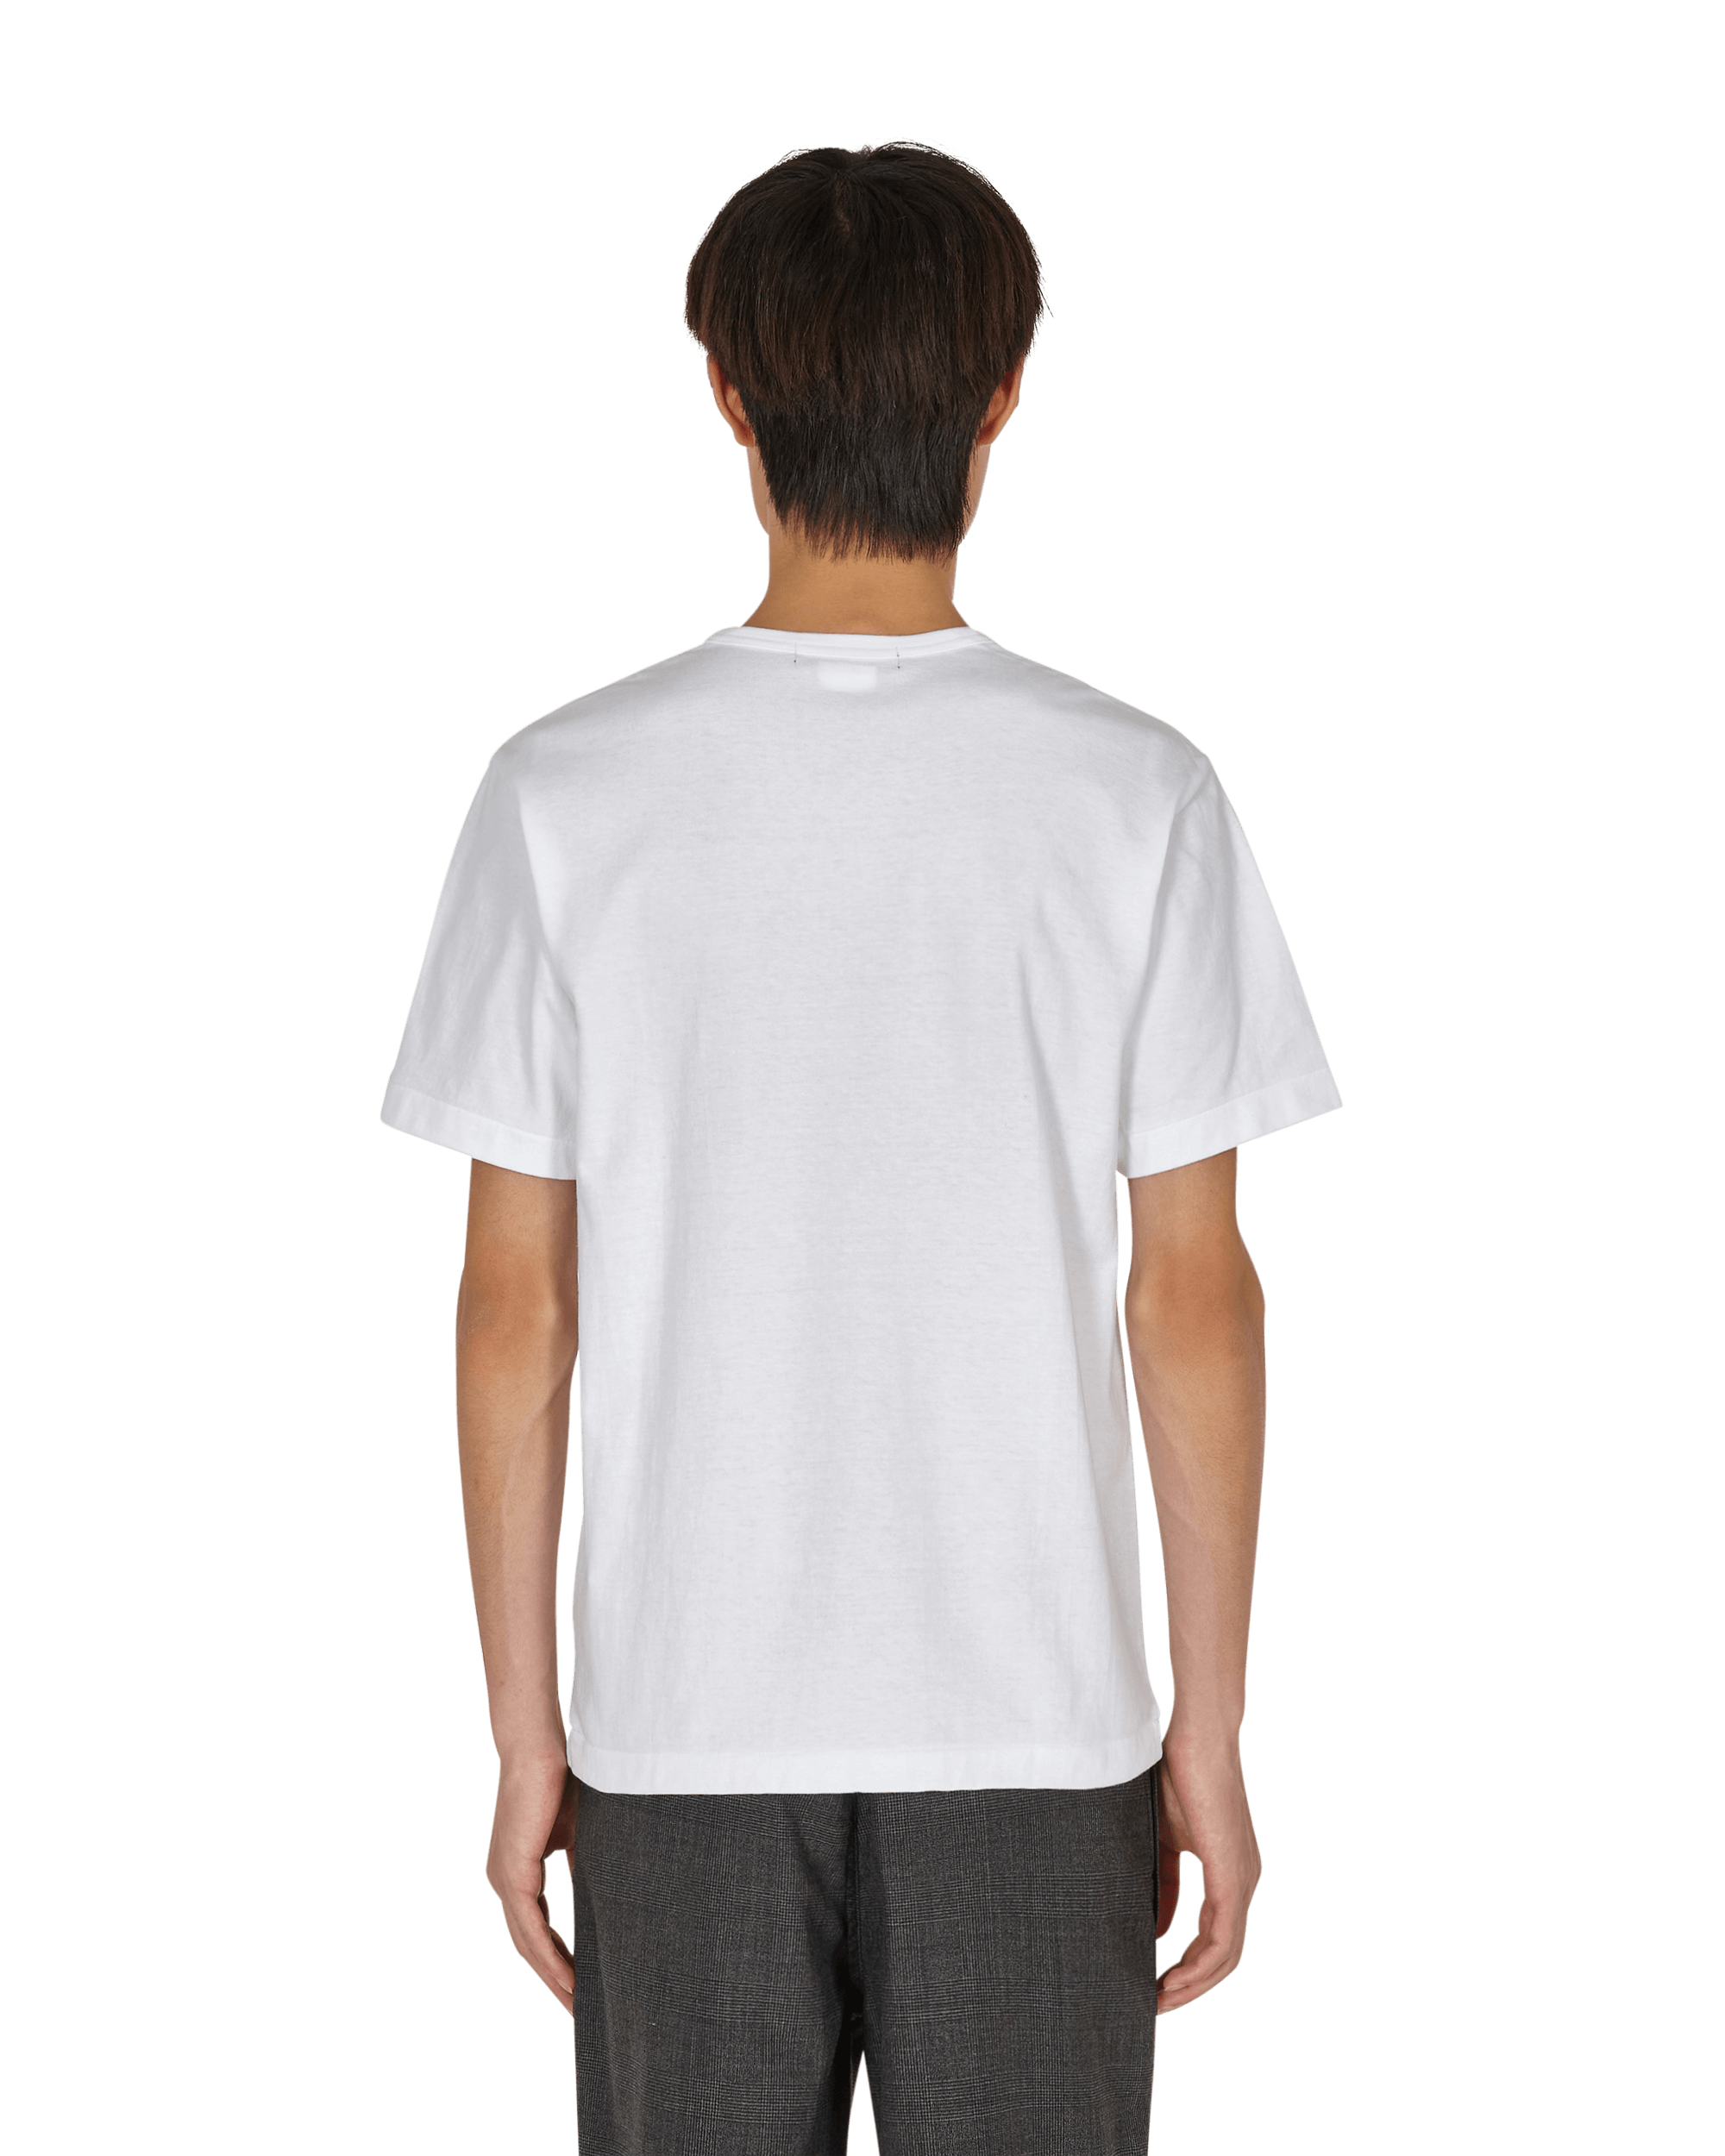 Comme Des Garcons Black T-Shirt White T-Shirts Shortsleeve 1H-T002-W21 1